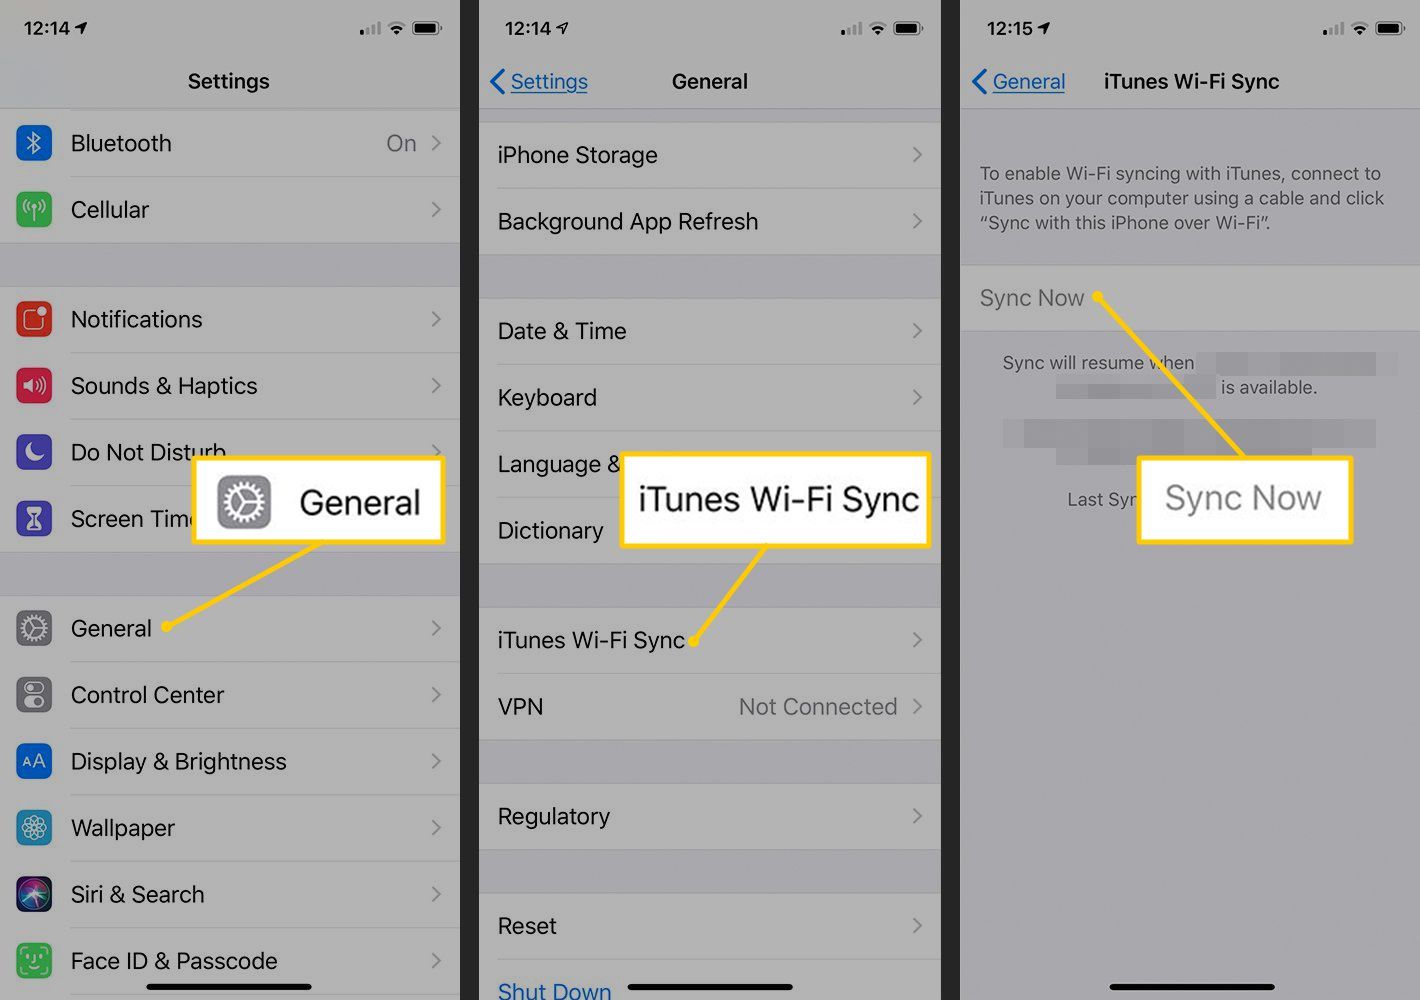 Общие, кнопки iTunes Wi-Fi Sync, Sync Now в настройках iOS